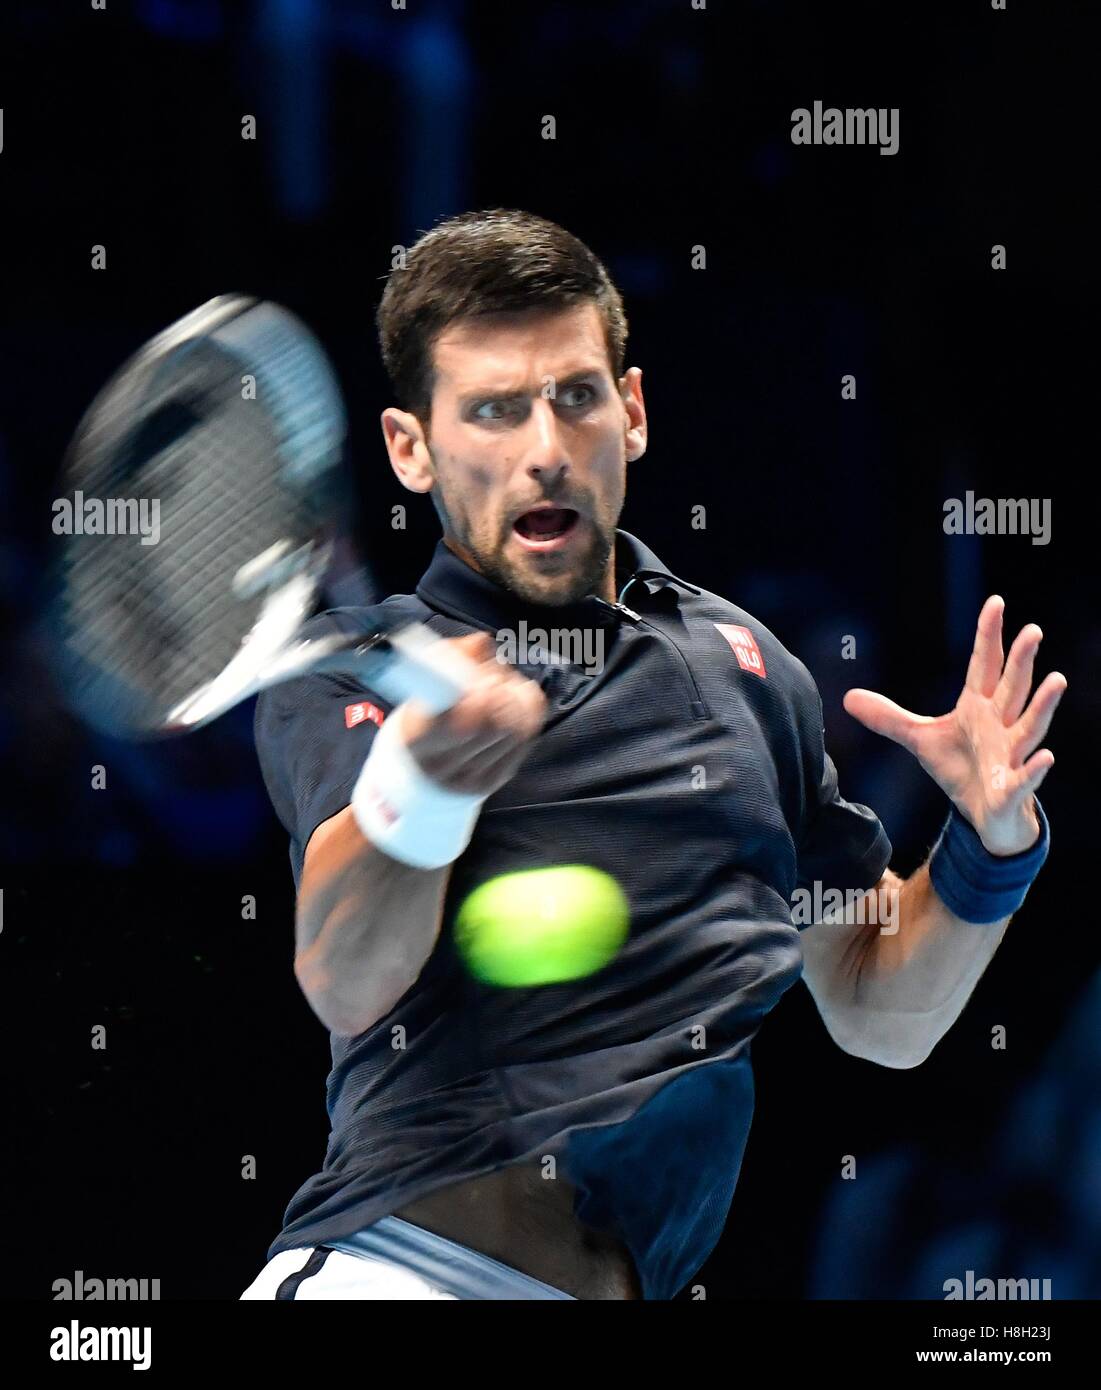 London, UK. 13. November 2016. Barclays ATP World Tour Finals 02 Arena London UK Novak Djokovic SRB V Dominic Thiem AUT Djokovic in Aktion während des Spiels, welches er 2: 1 Credit gewann: Leo Mason/Alamy Live News Stockfoto